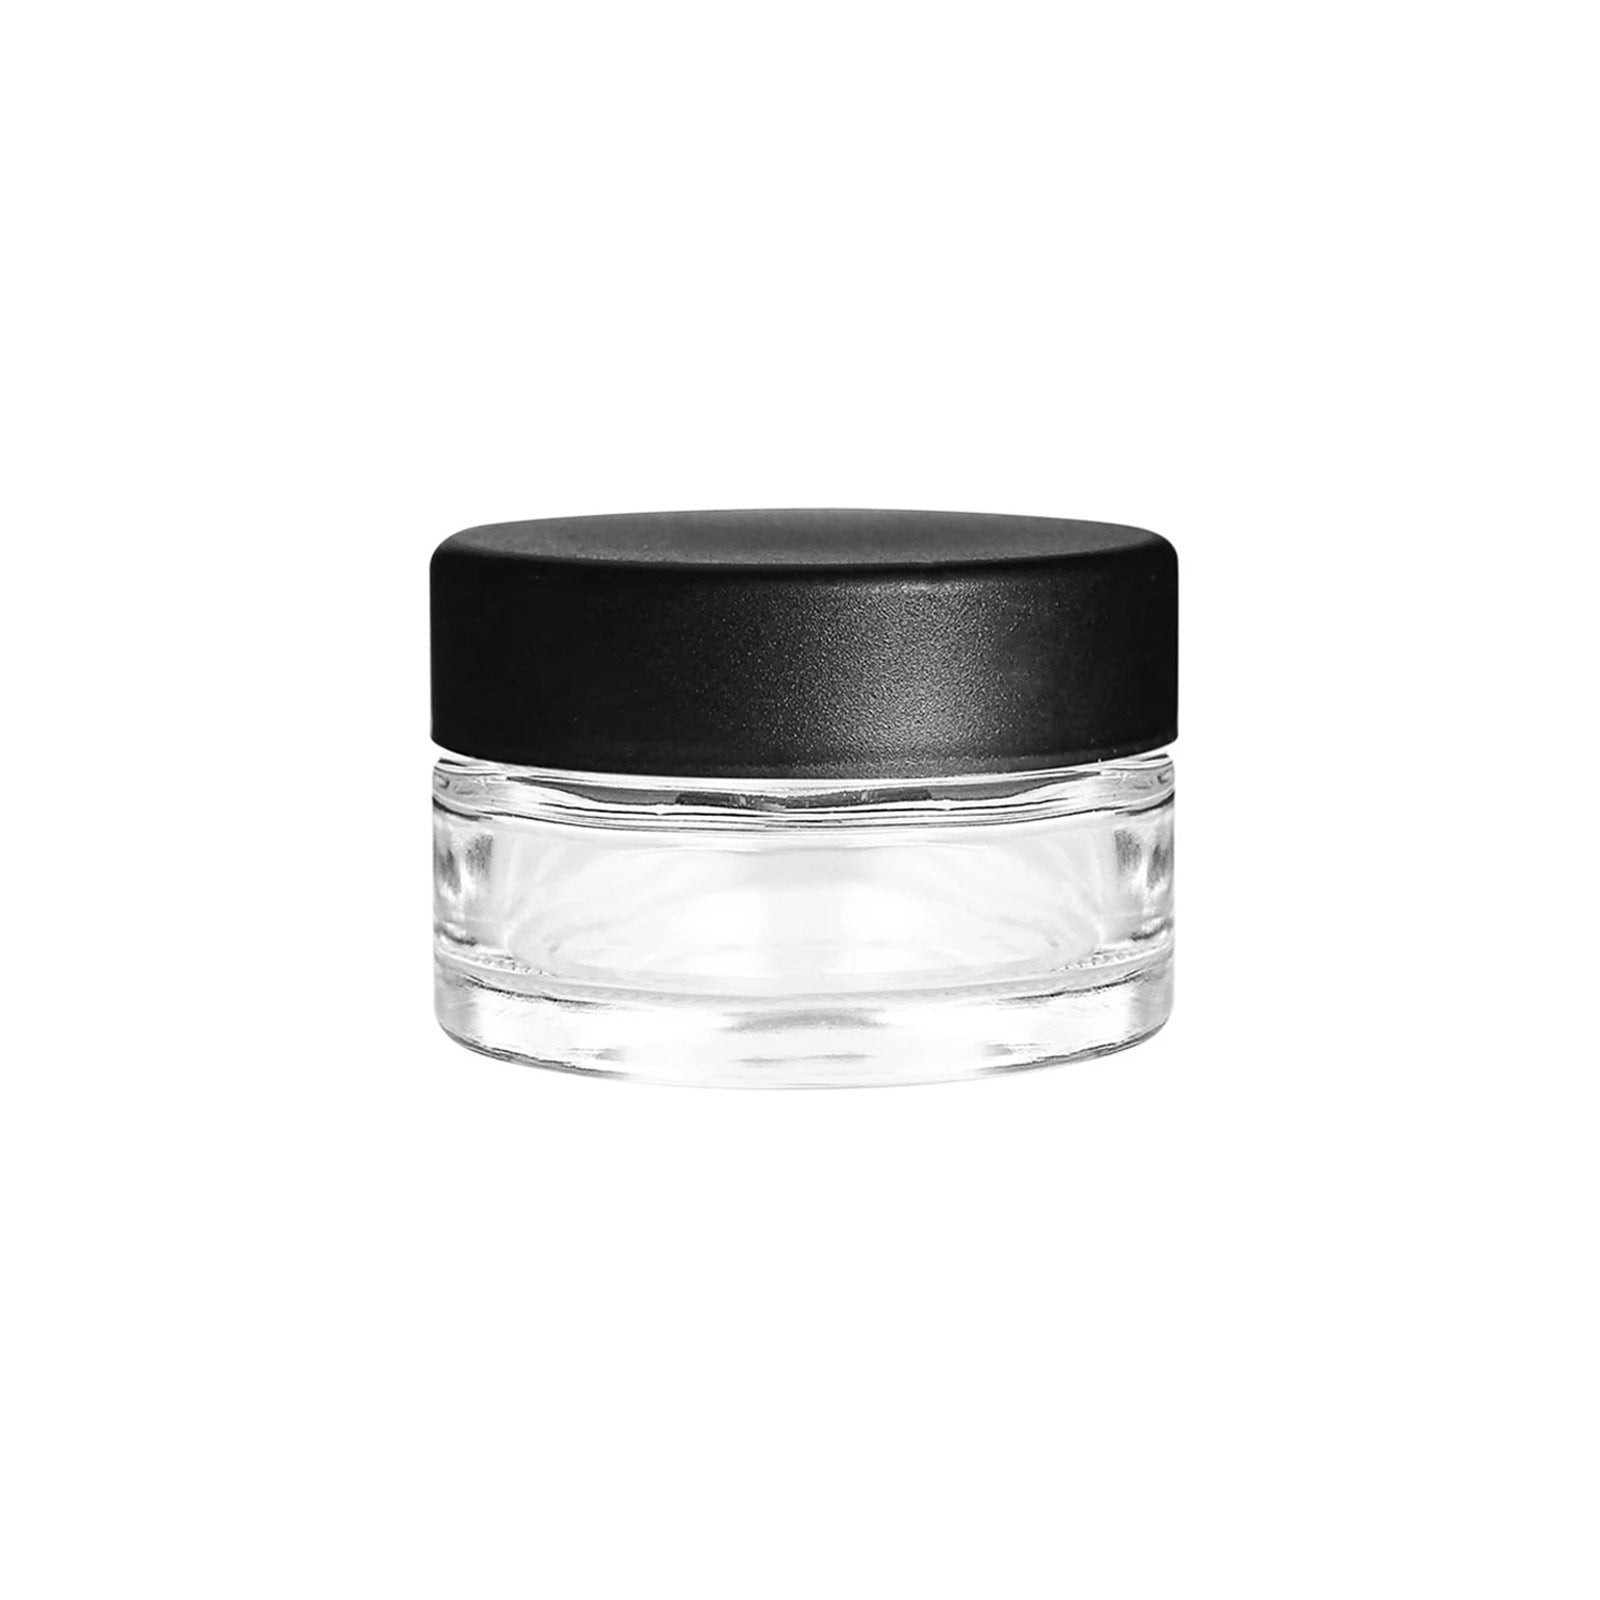 1oz Child Resistant Glass Jars With Black Caps - 1-2 Grams - 200 Count